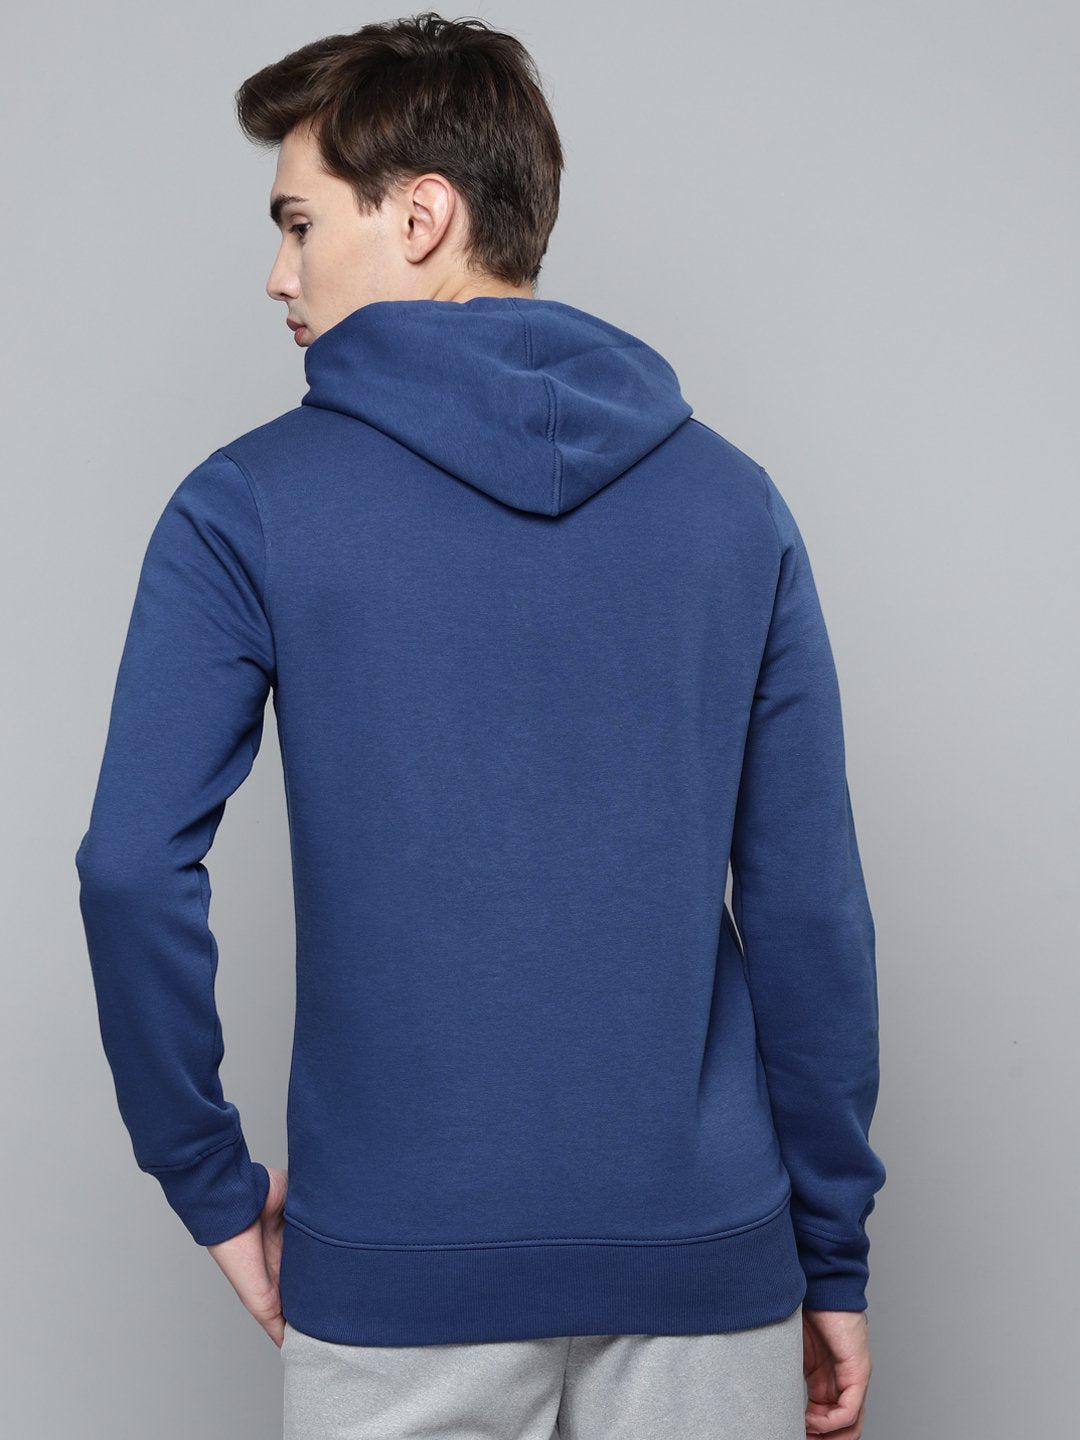 Alcis Men Blue Colourblocked Hooded Sweatshirt